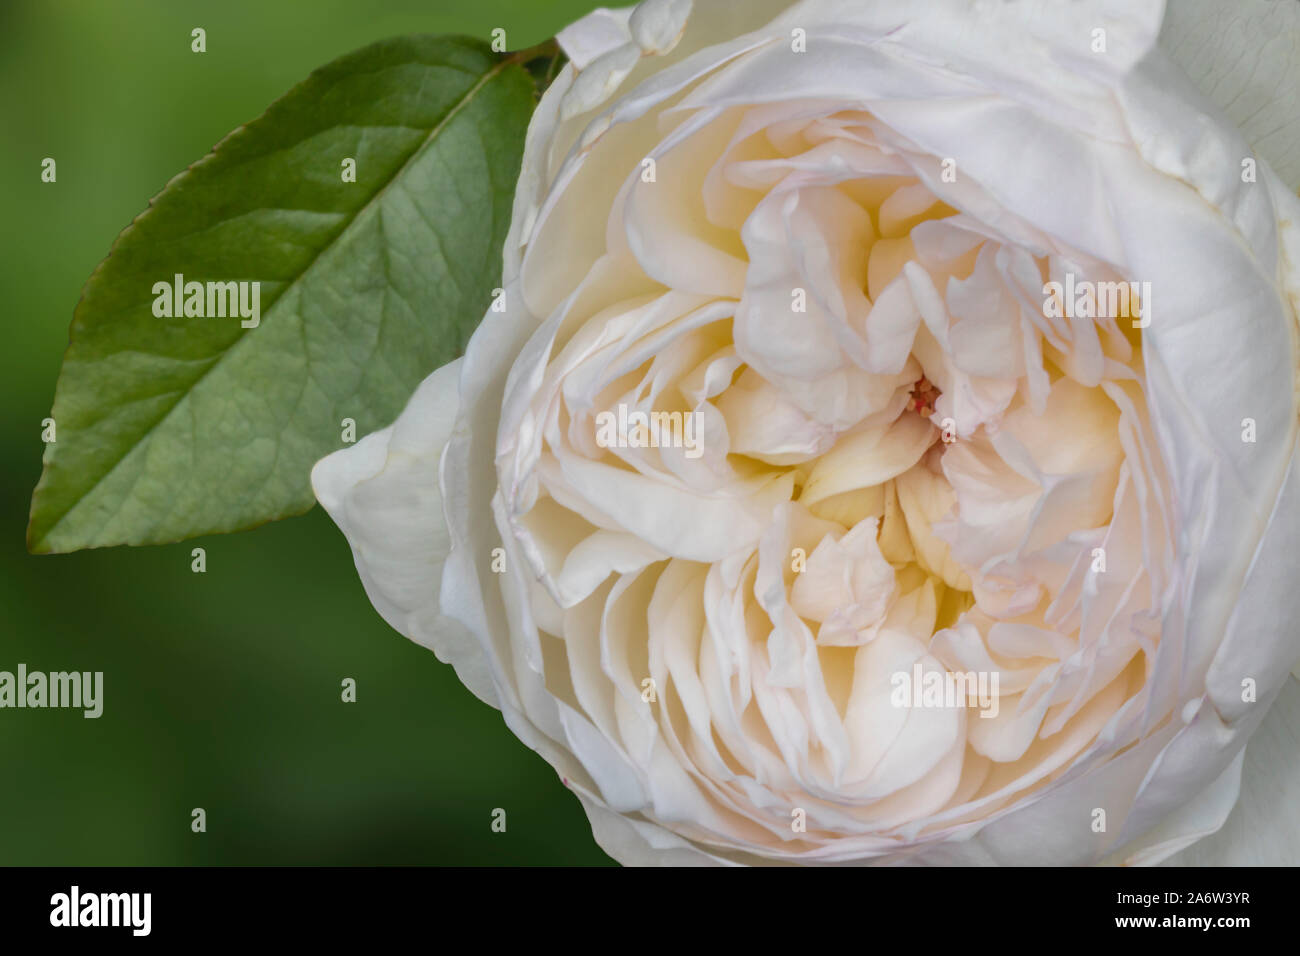 Weiße Pfingstrose Blume Stockfoto